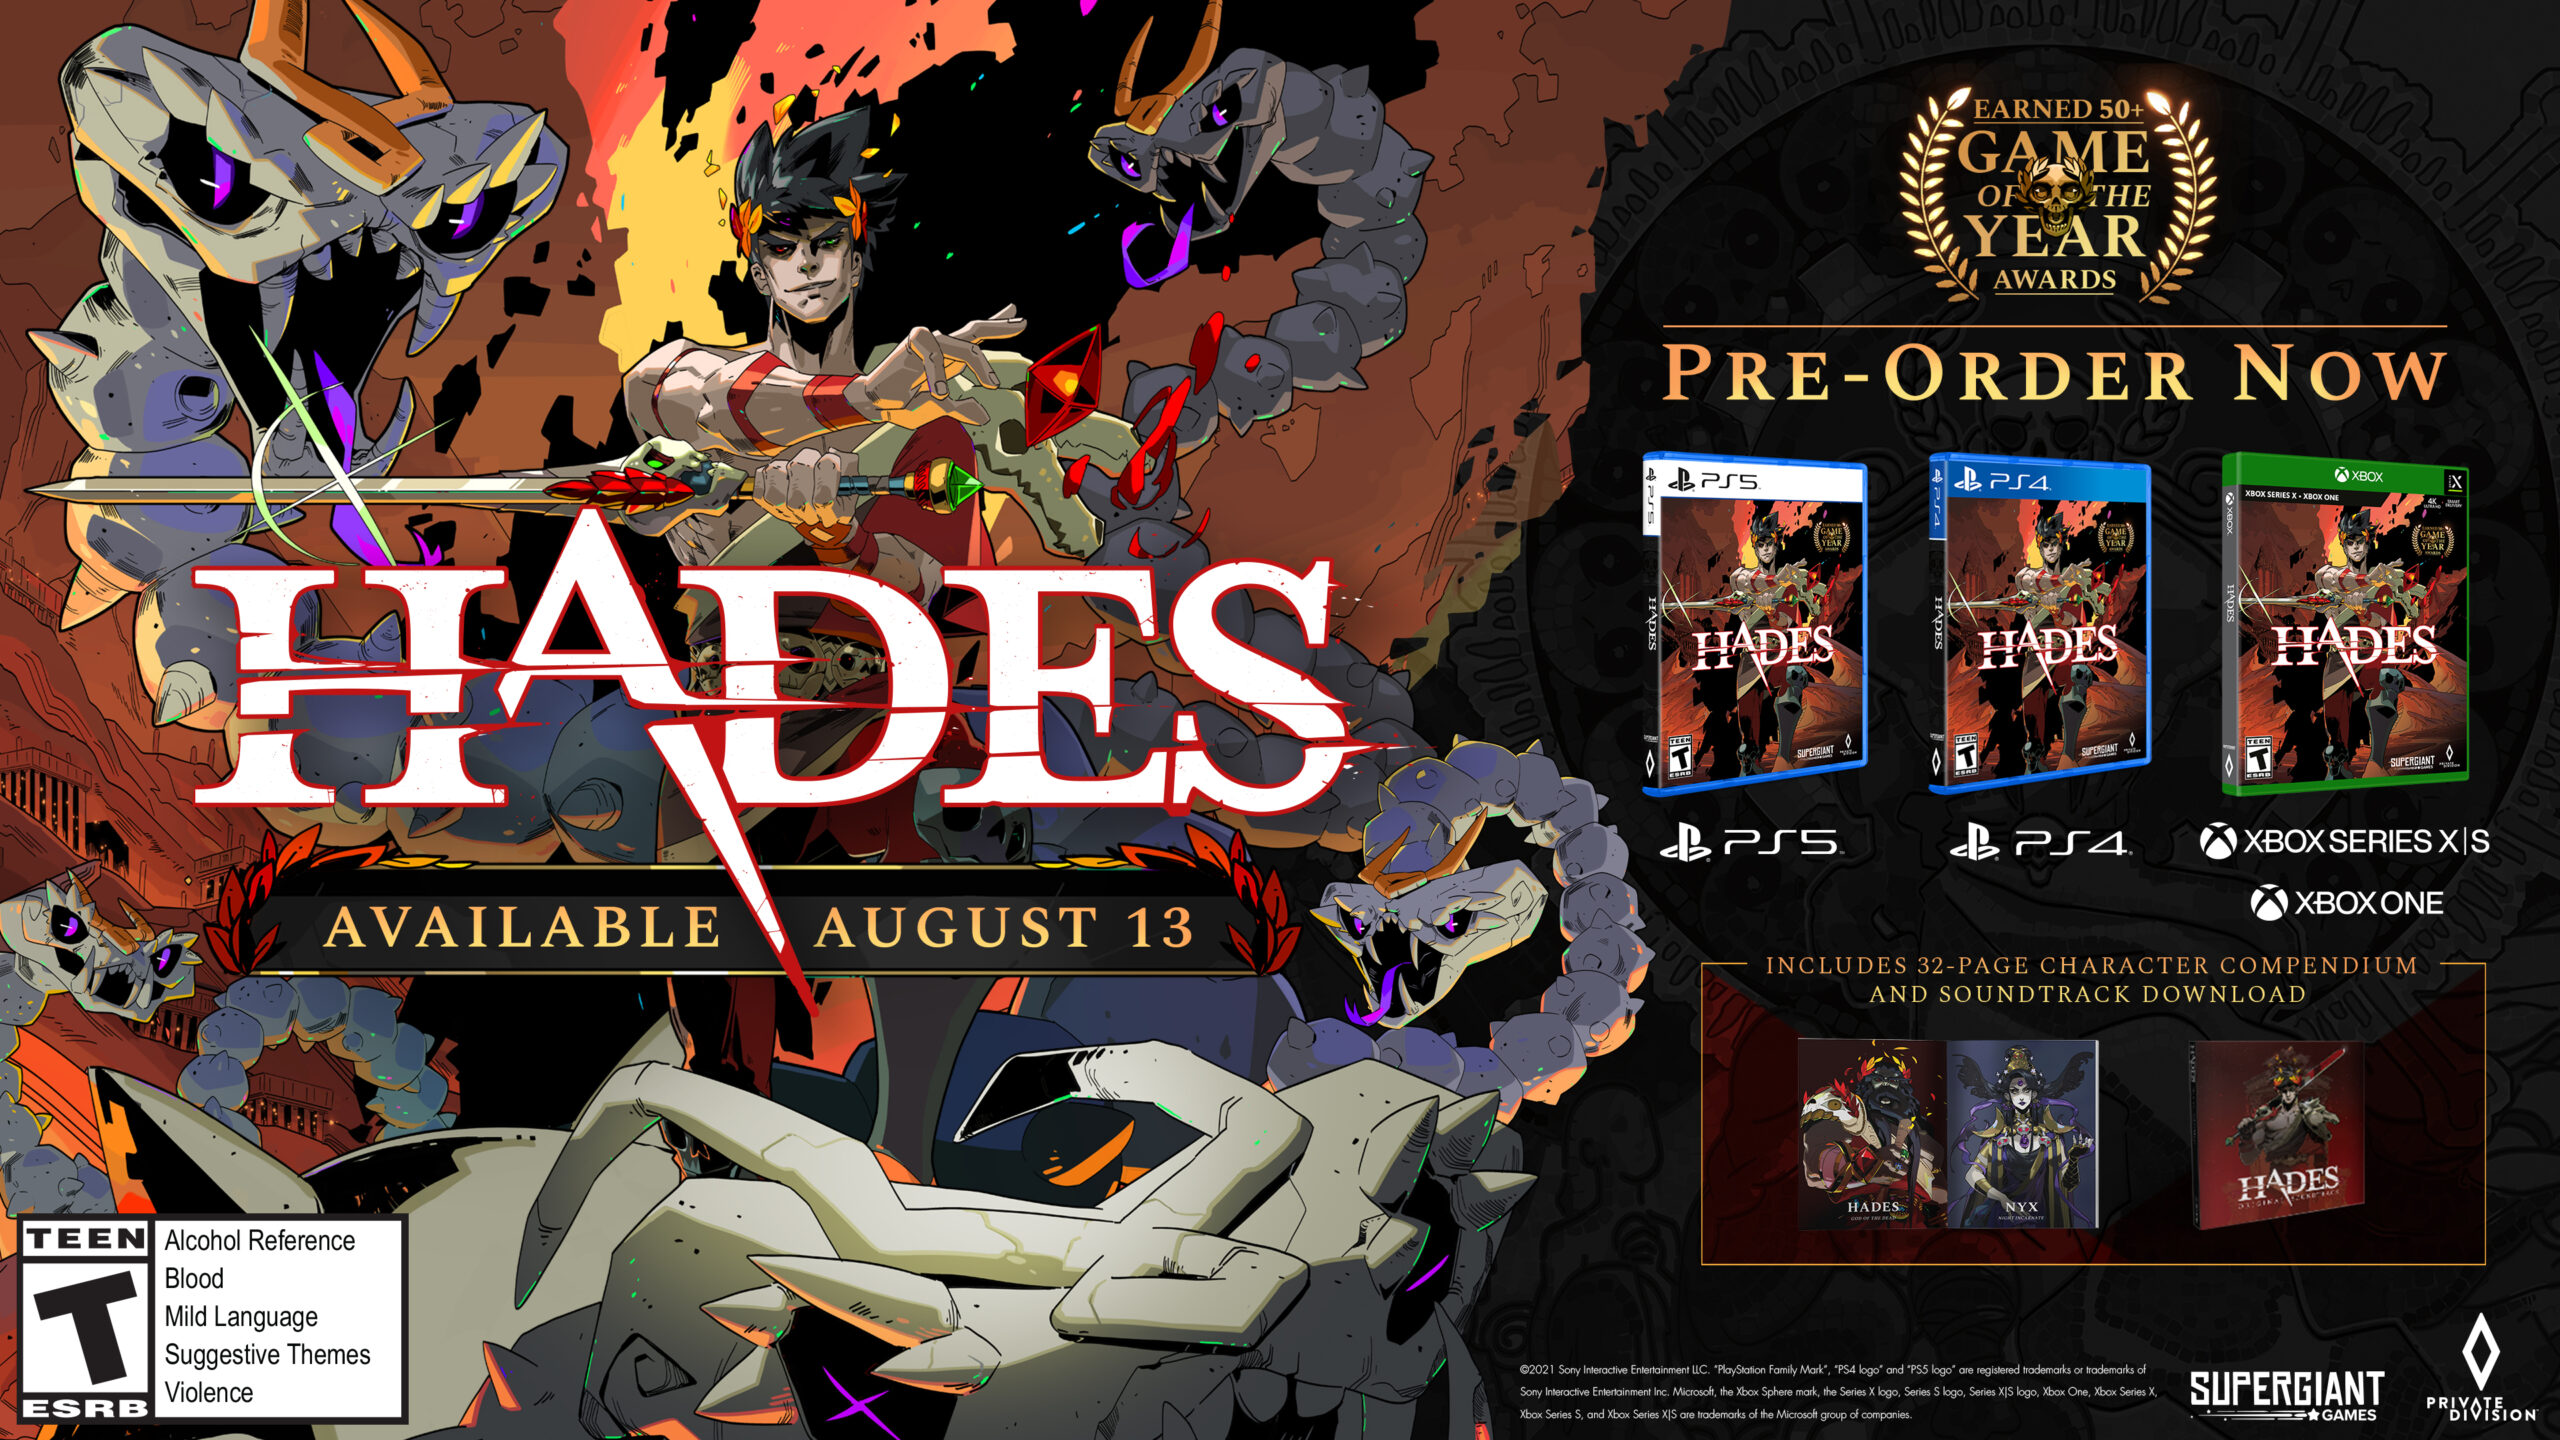 Hades (Switch) - Digital Download